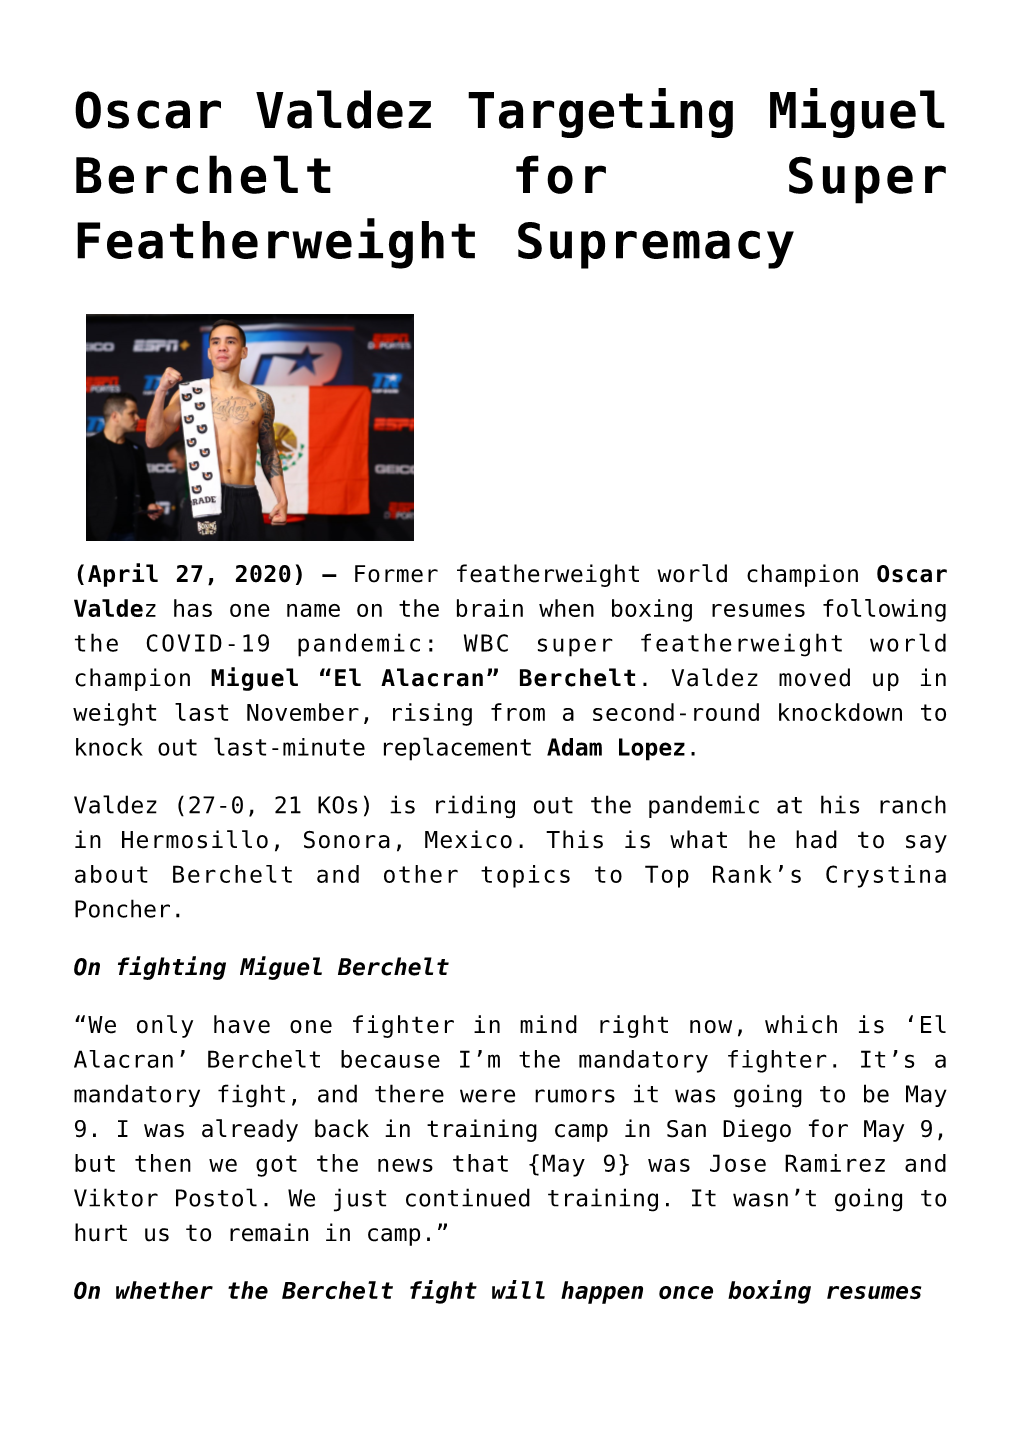 Oscar Valdez Targeting Miguel Berchelt for Super Featherweight Supremacy